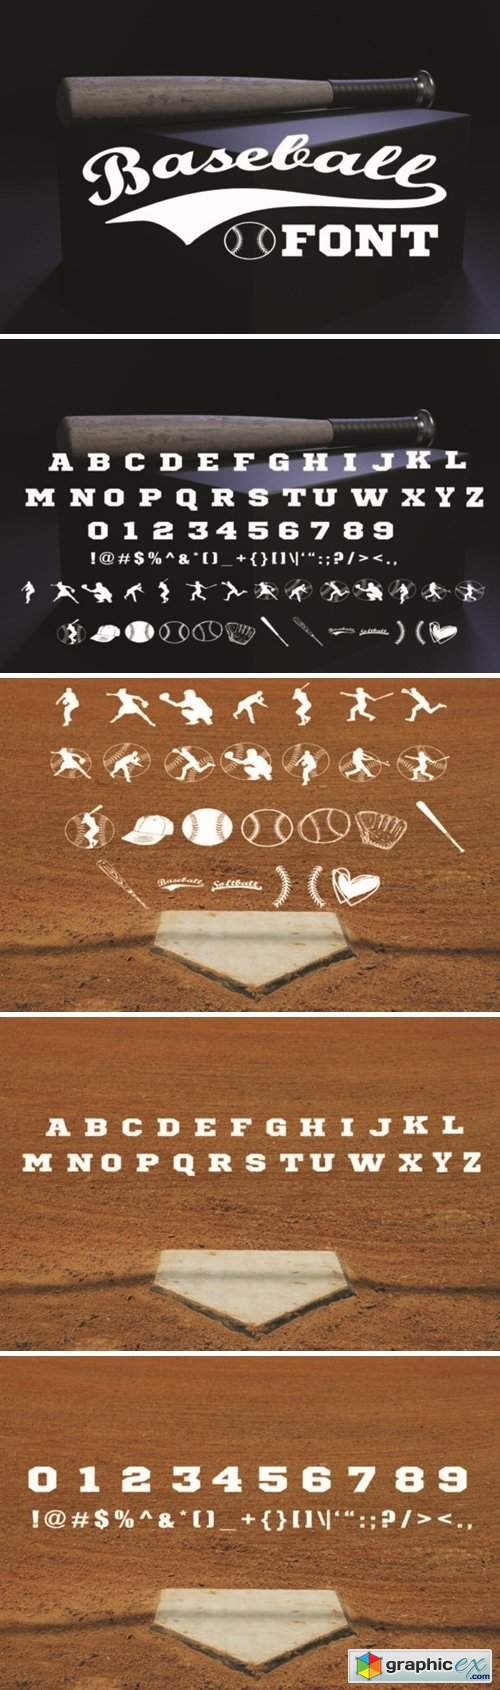  Baseball Font 